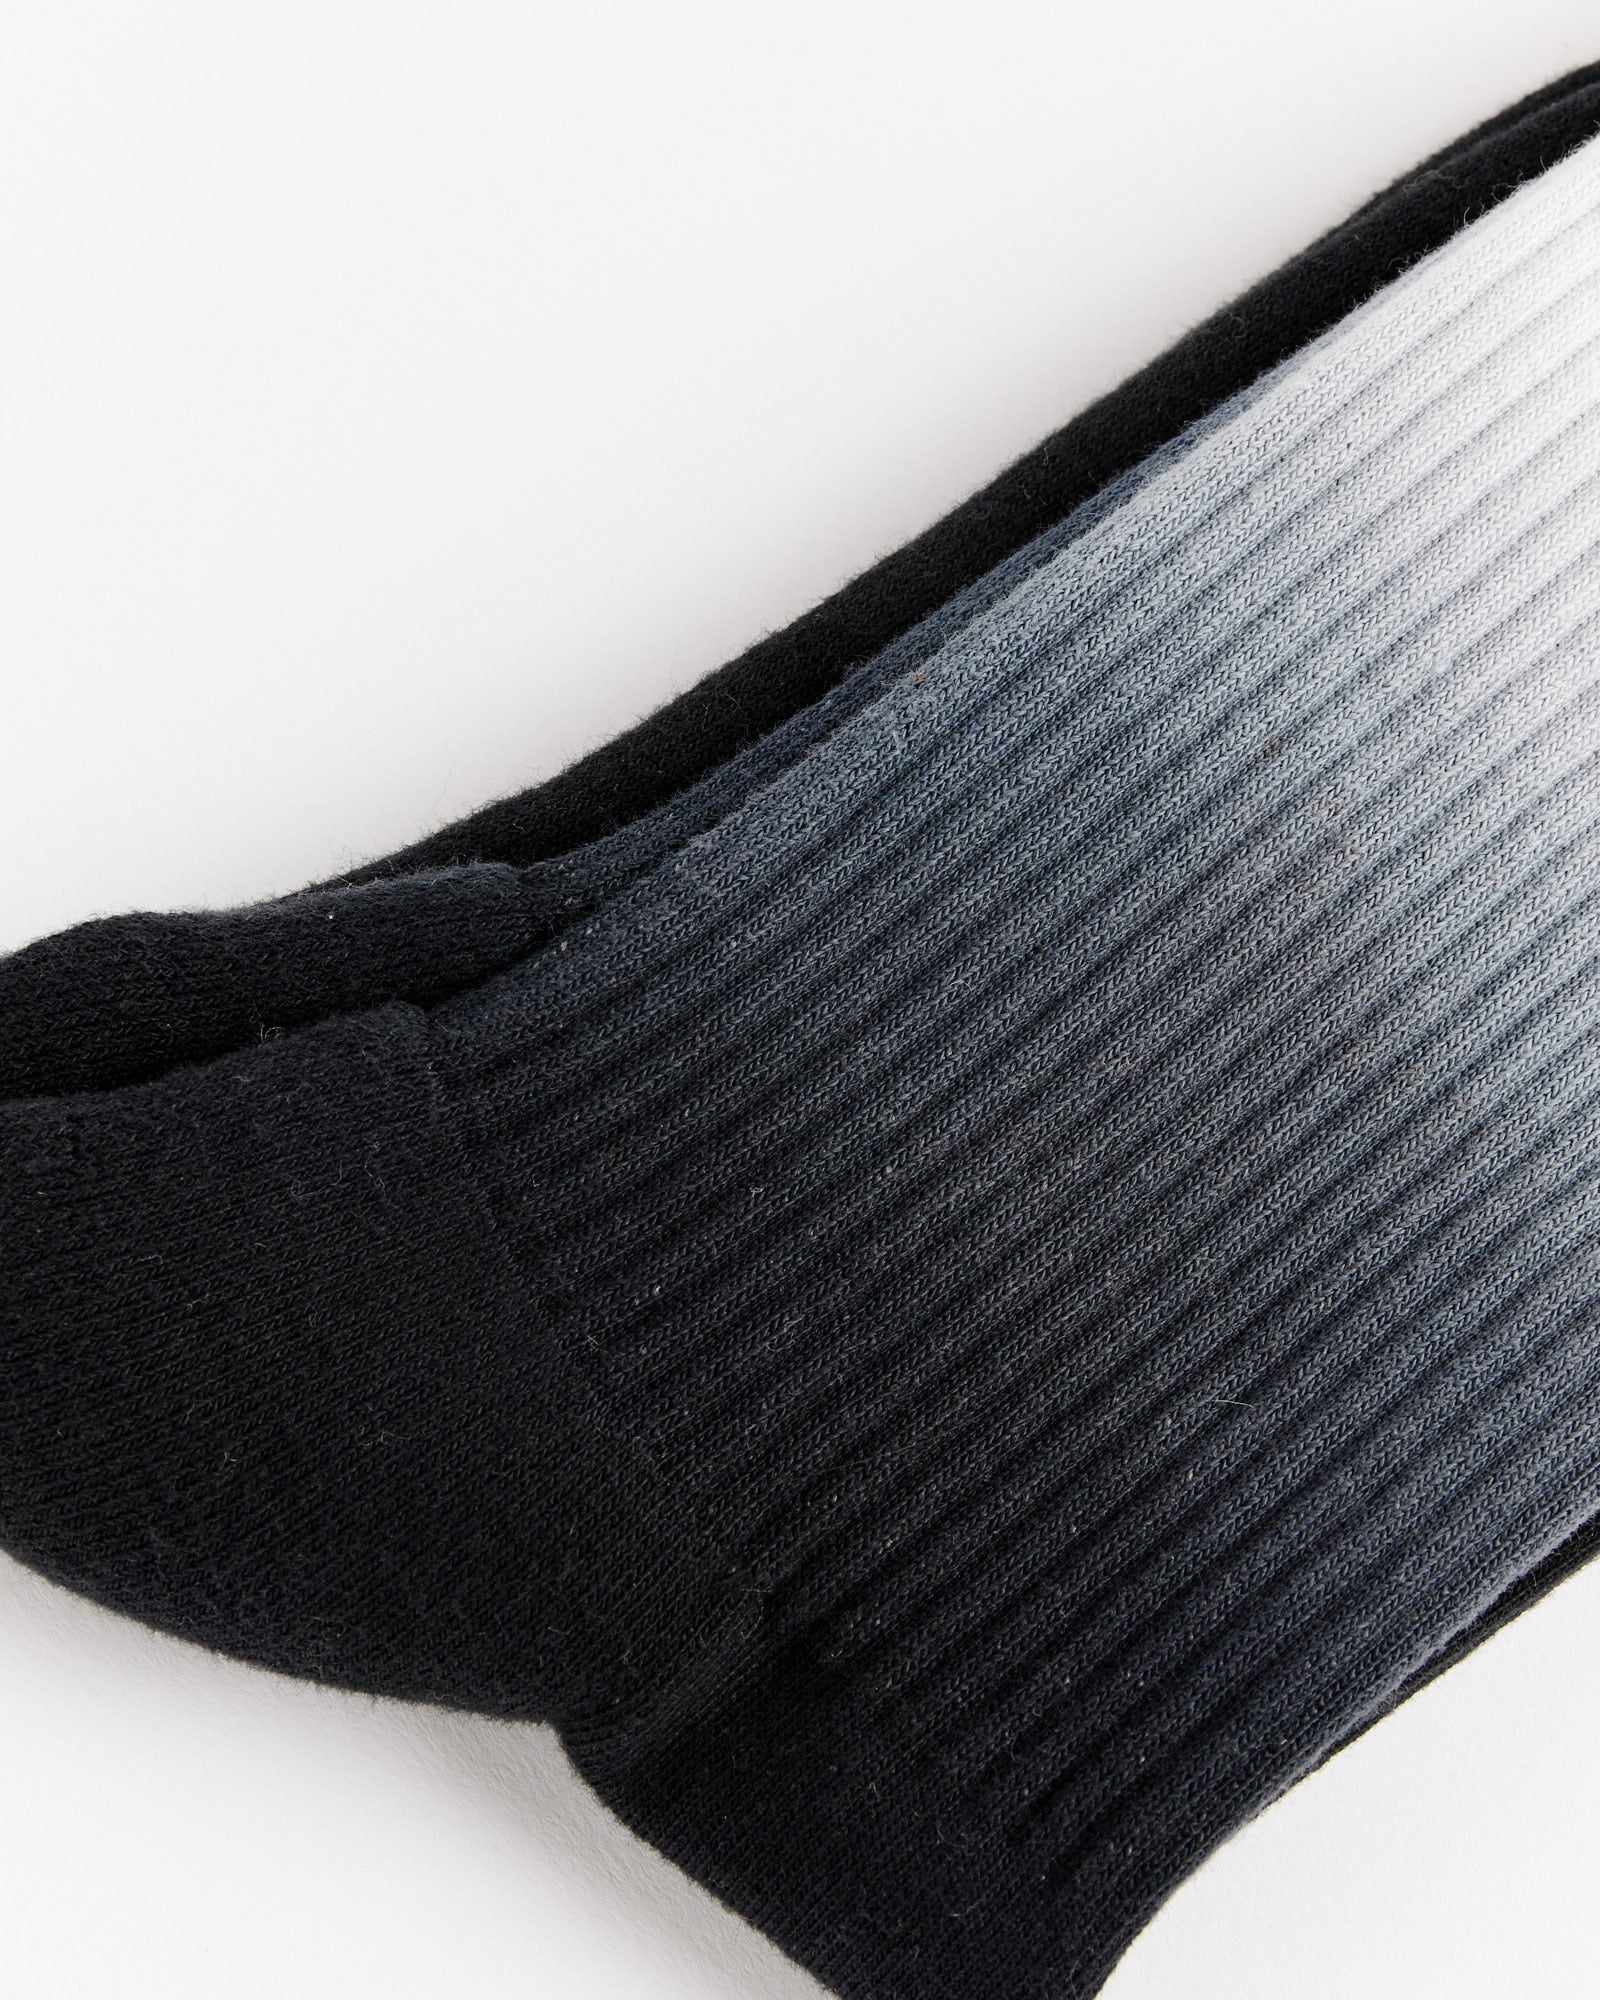 Les Chaussettes Moisson Socks in Navy